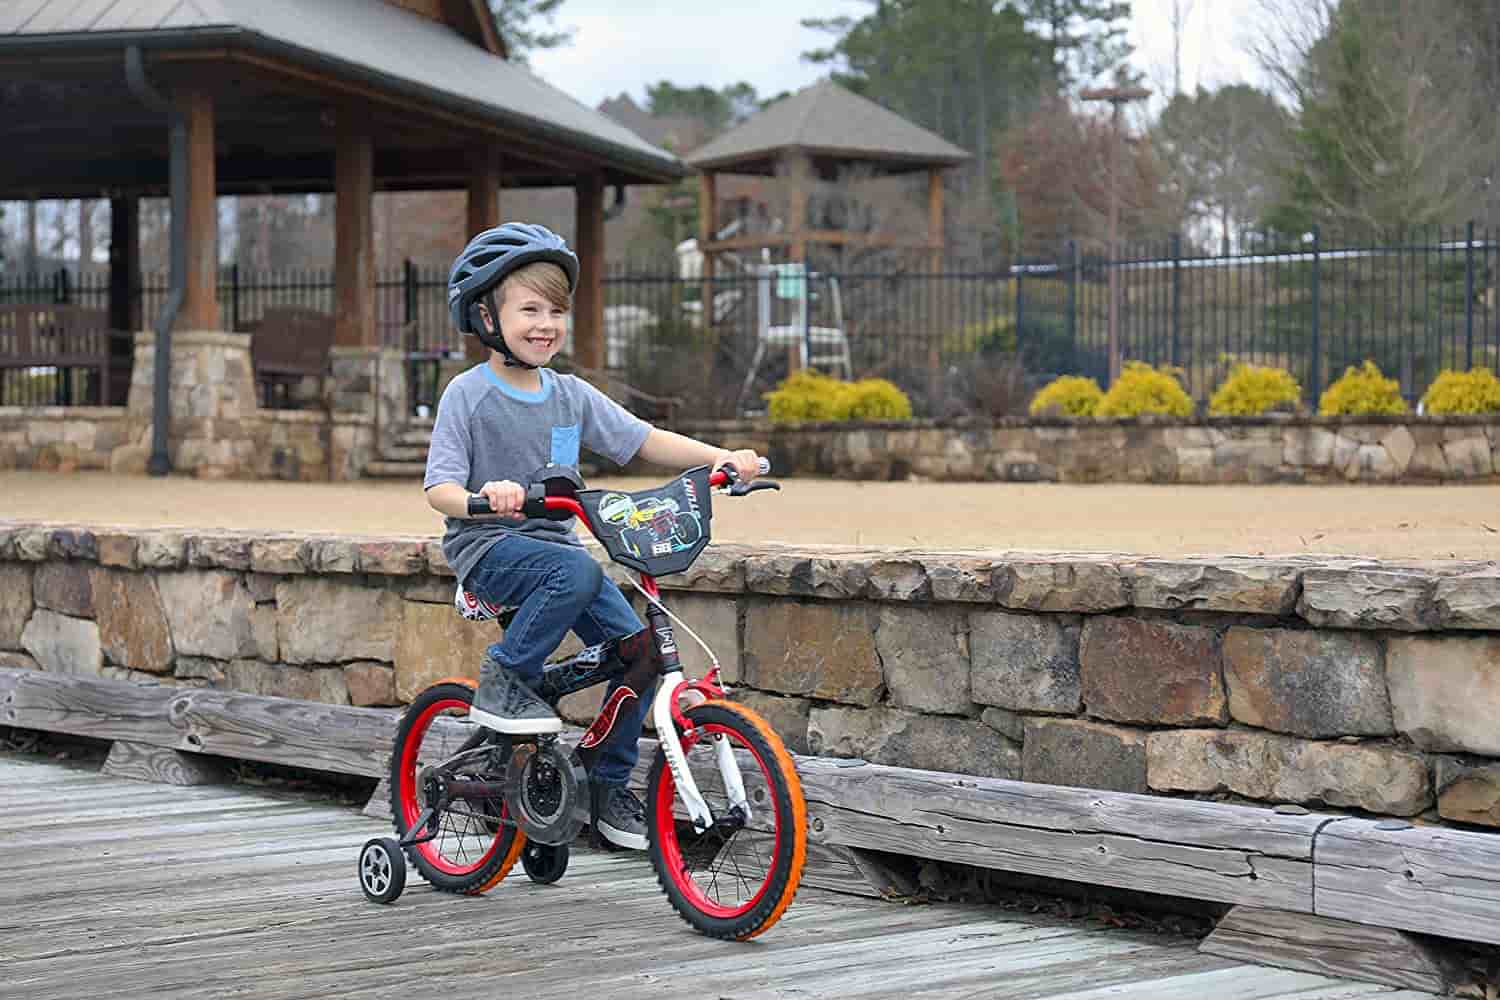 The Best Bmx Bikes For Kids